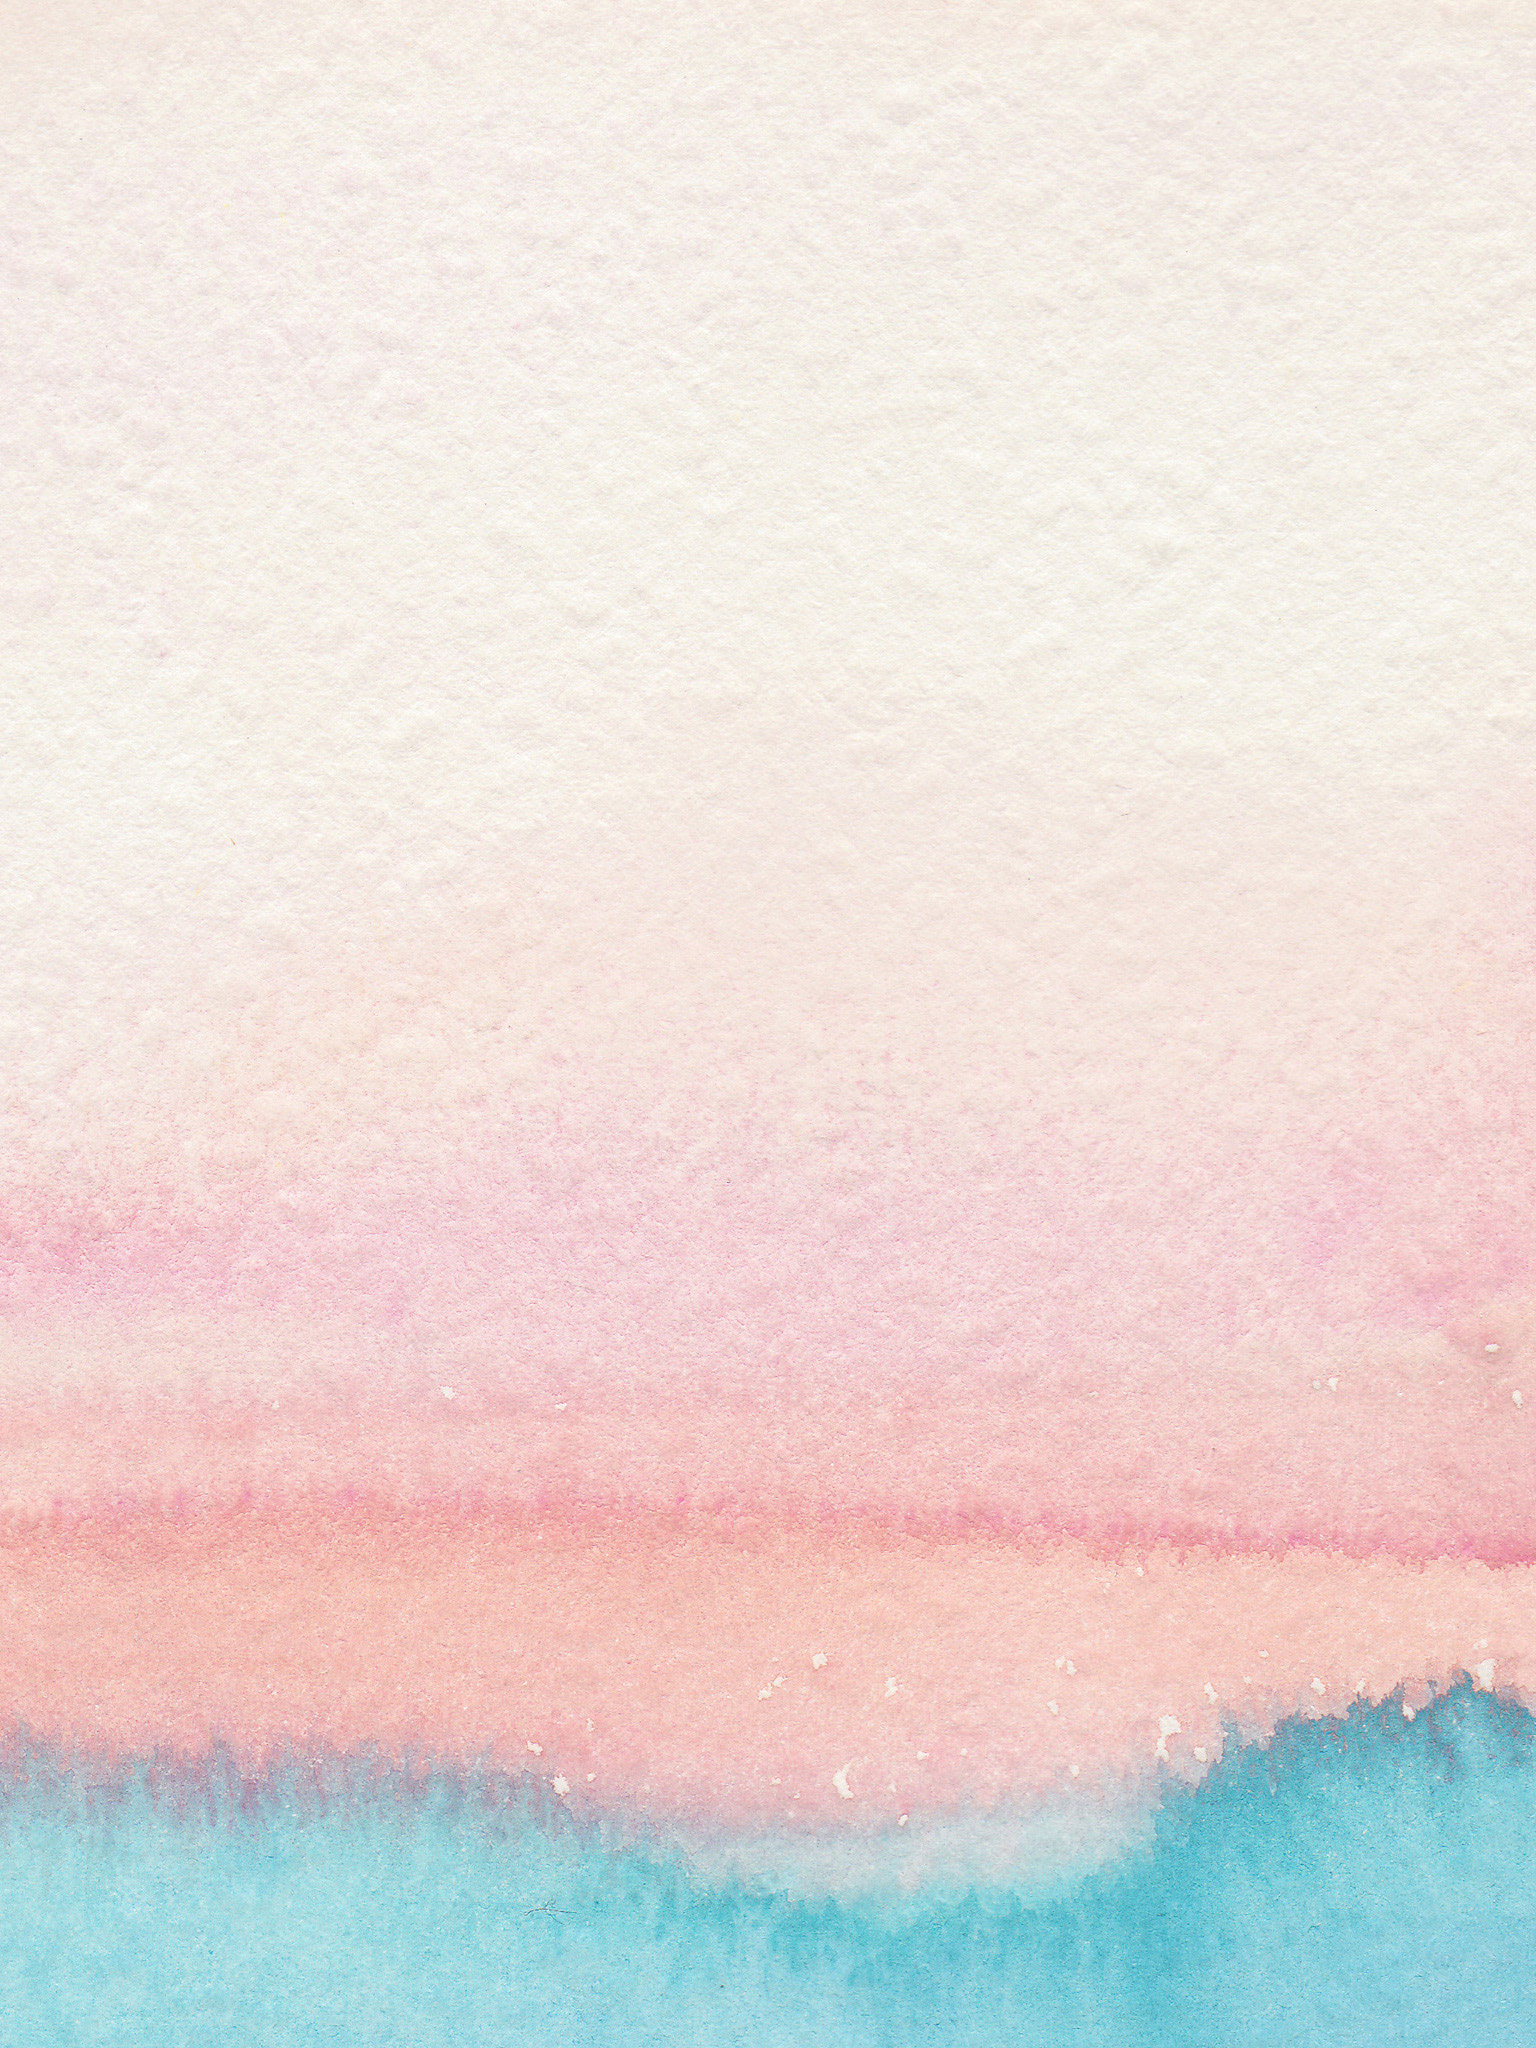 papel de acuarela,rosado,azul,turquesa,cielo,pintura de acuarela